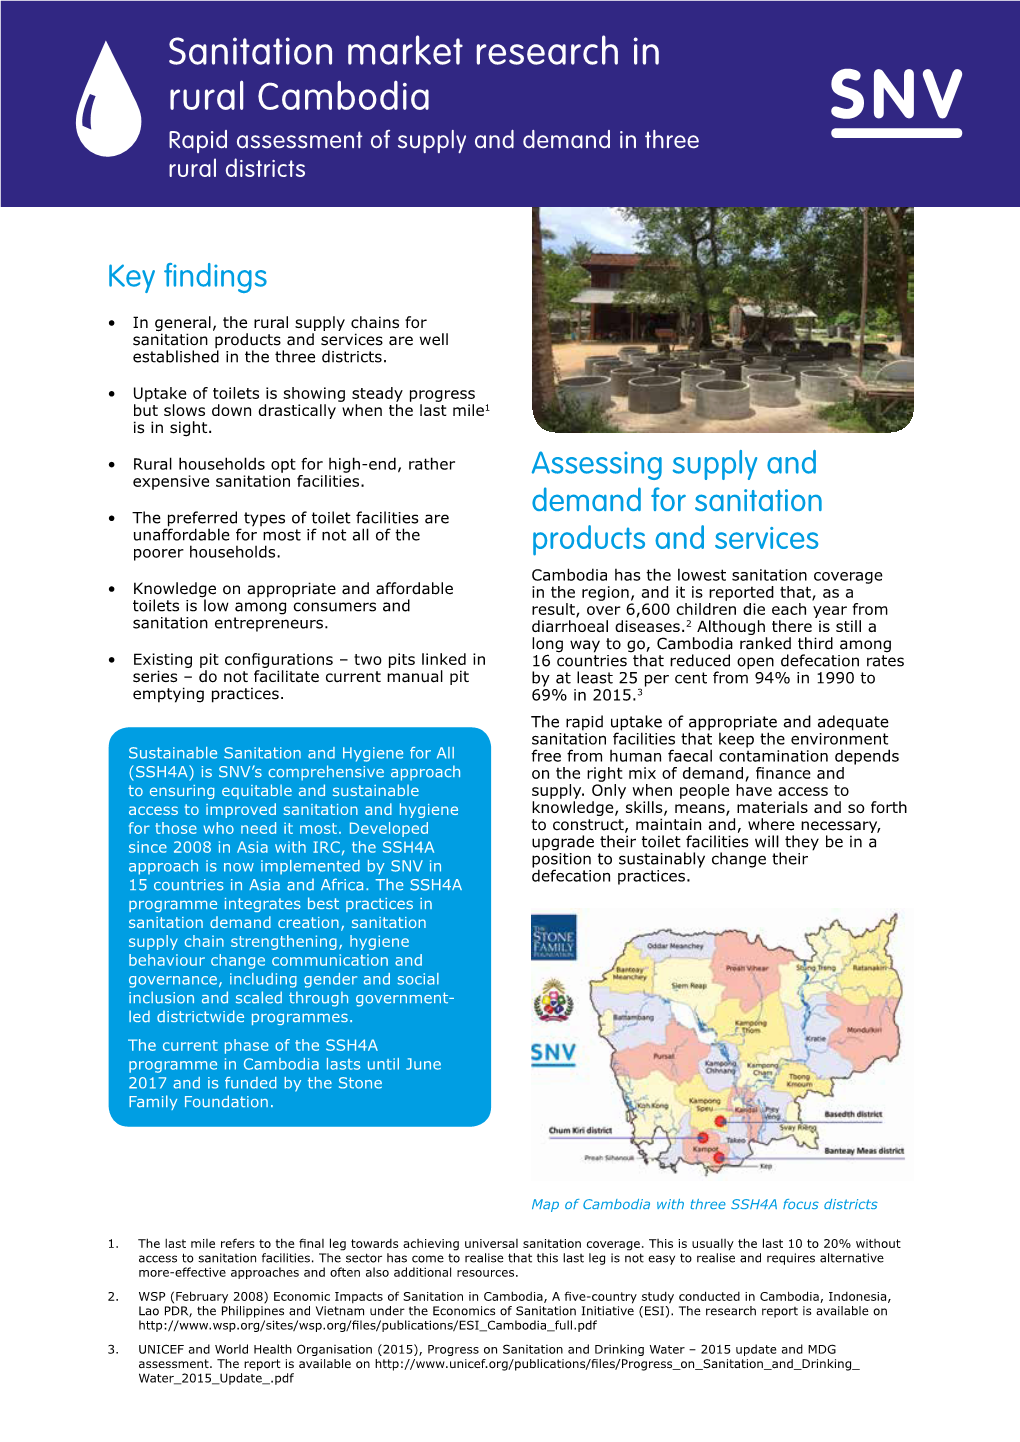 Sanitation Market Research in Rural Cambodia